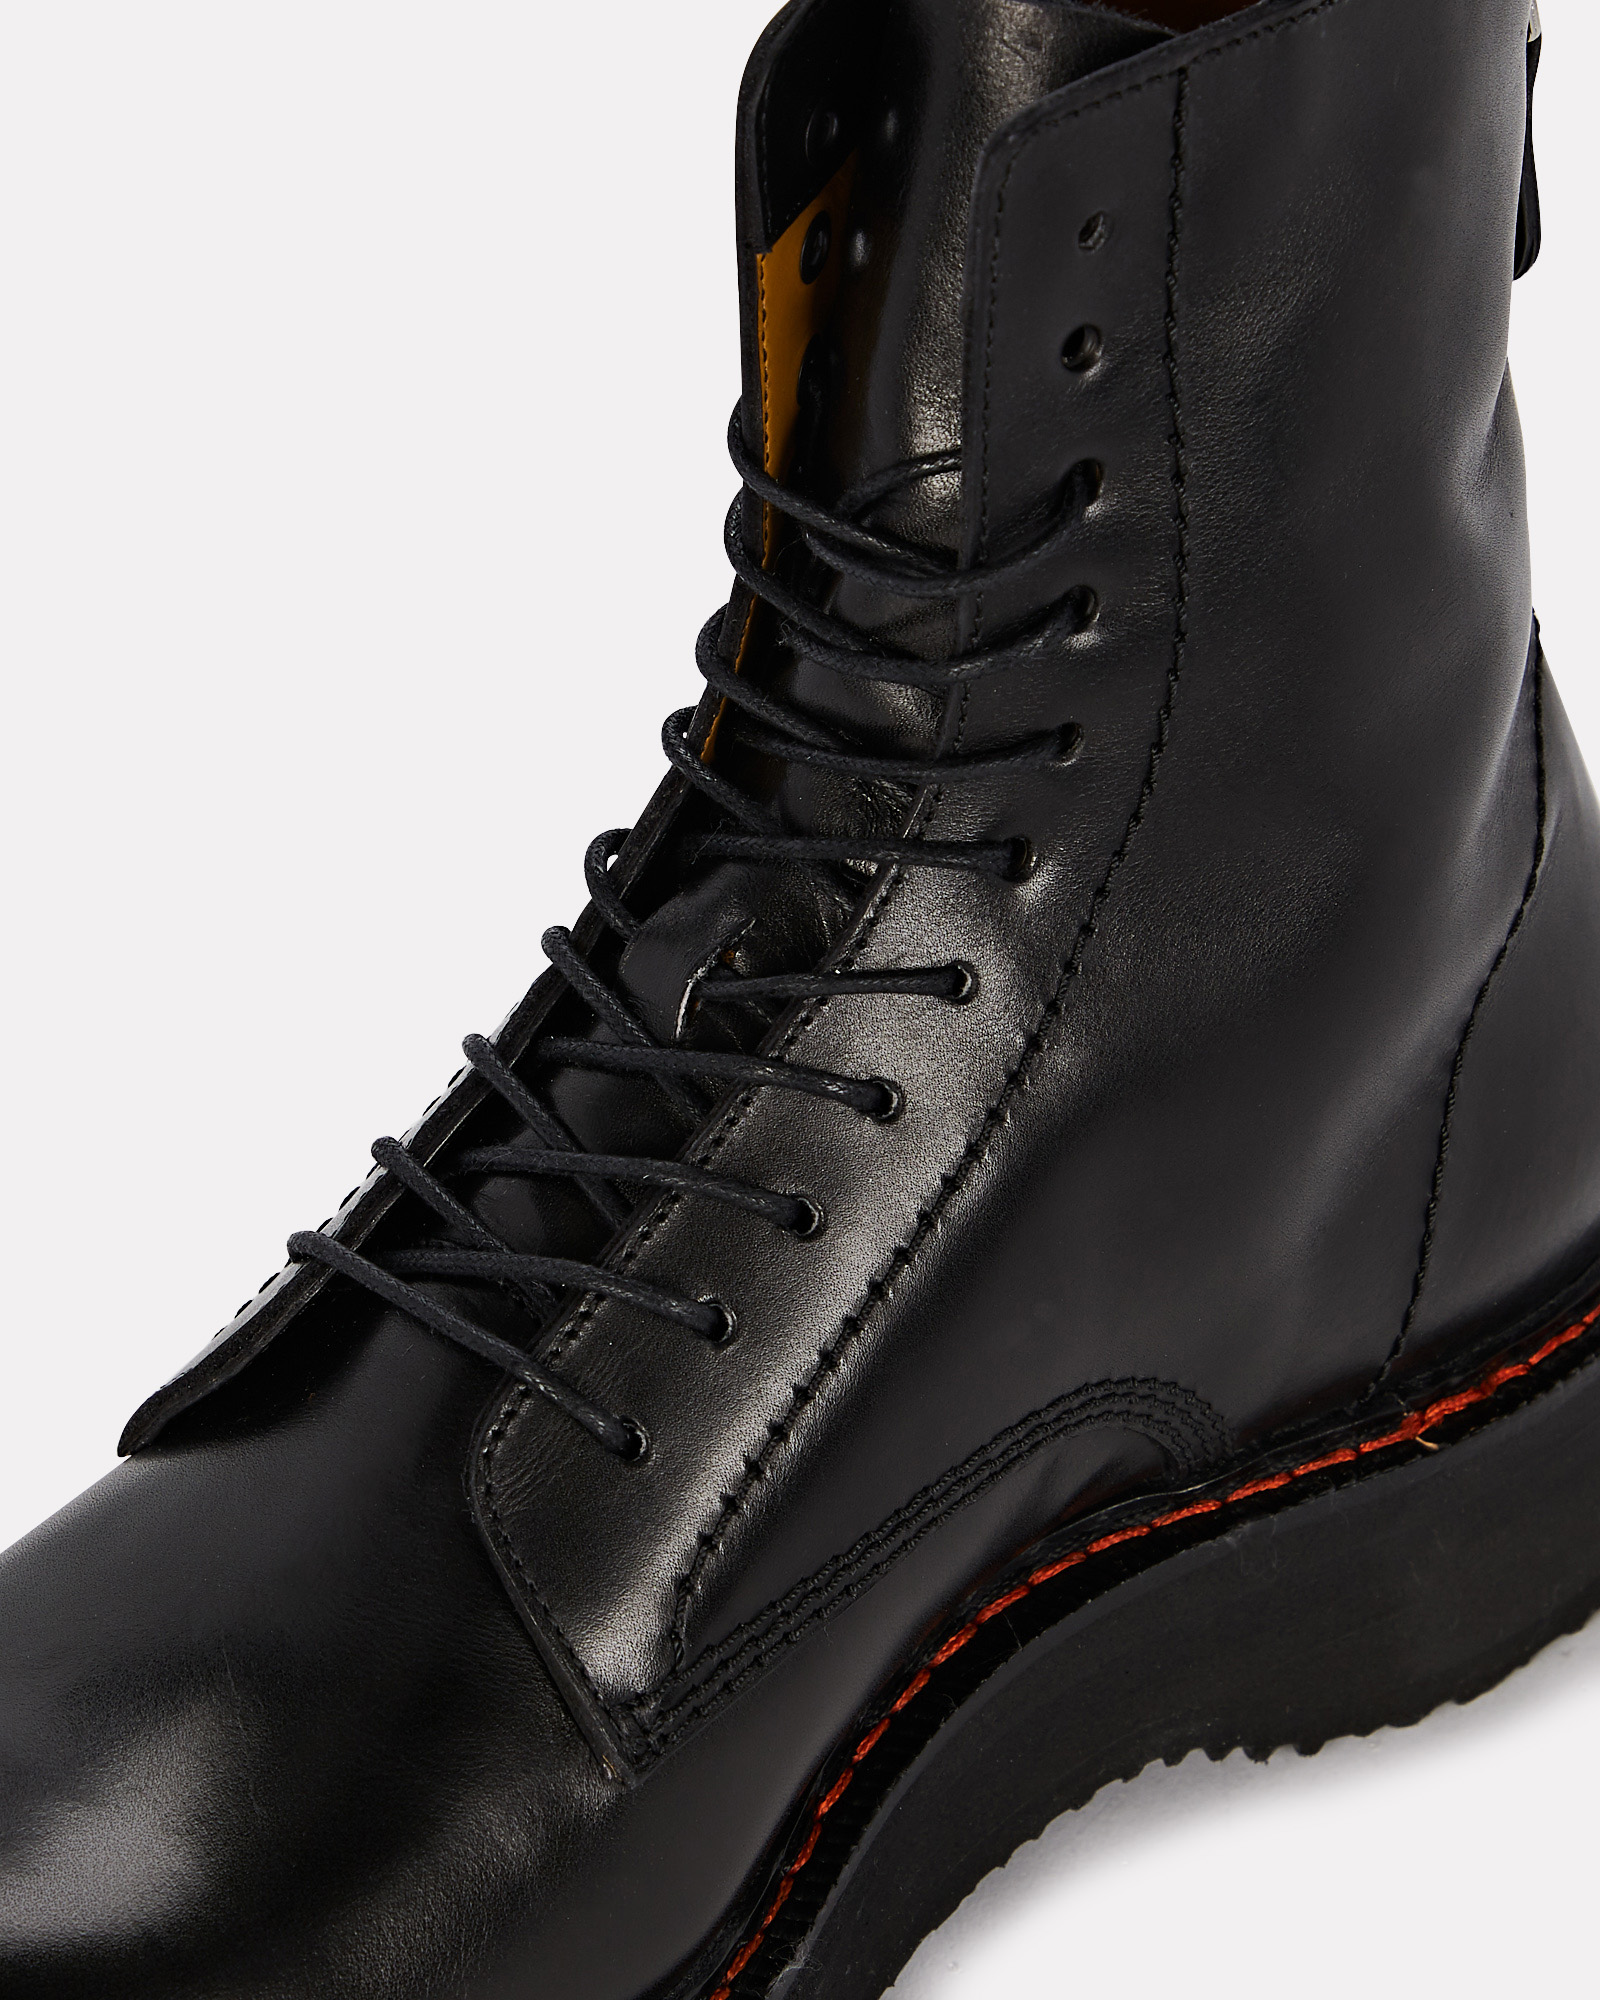 r13 combat boots